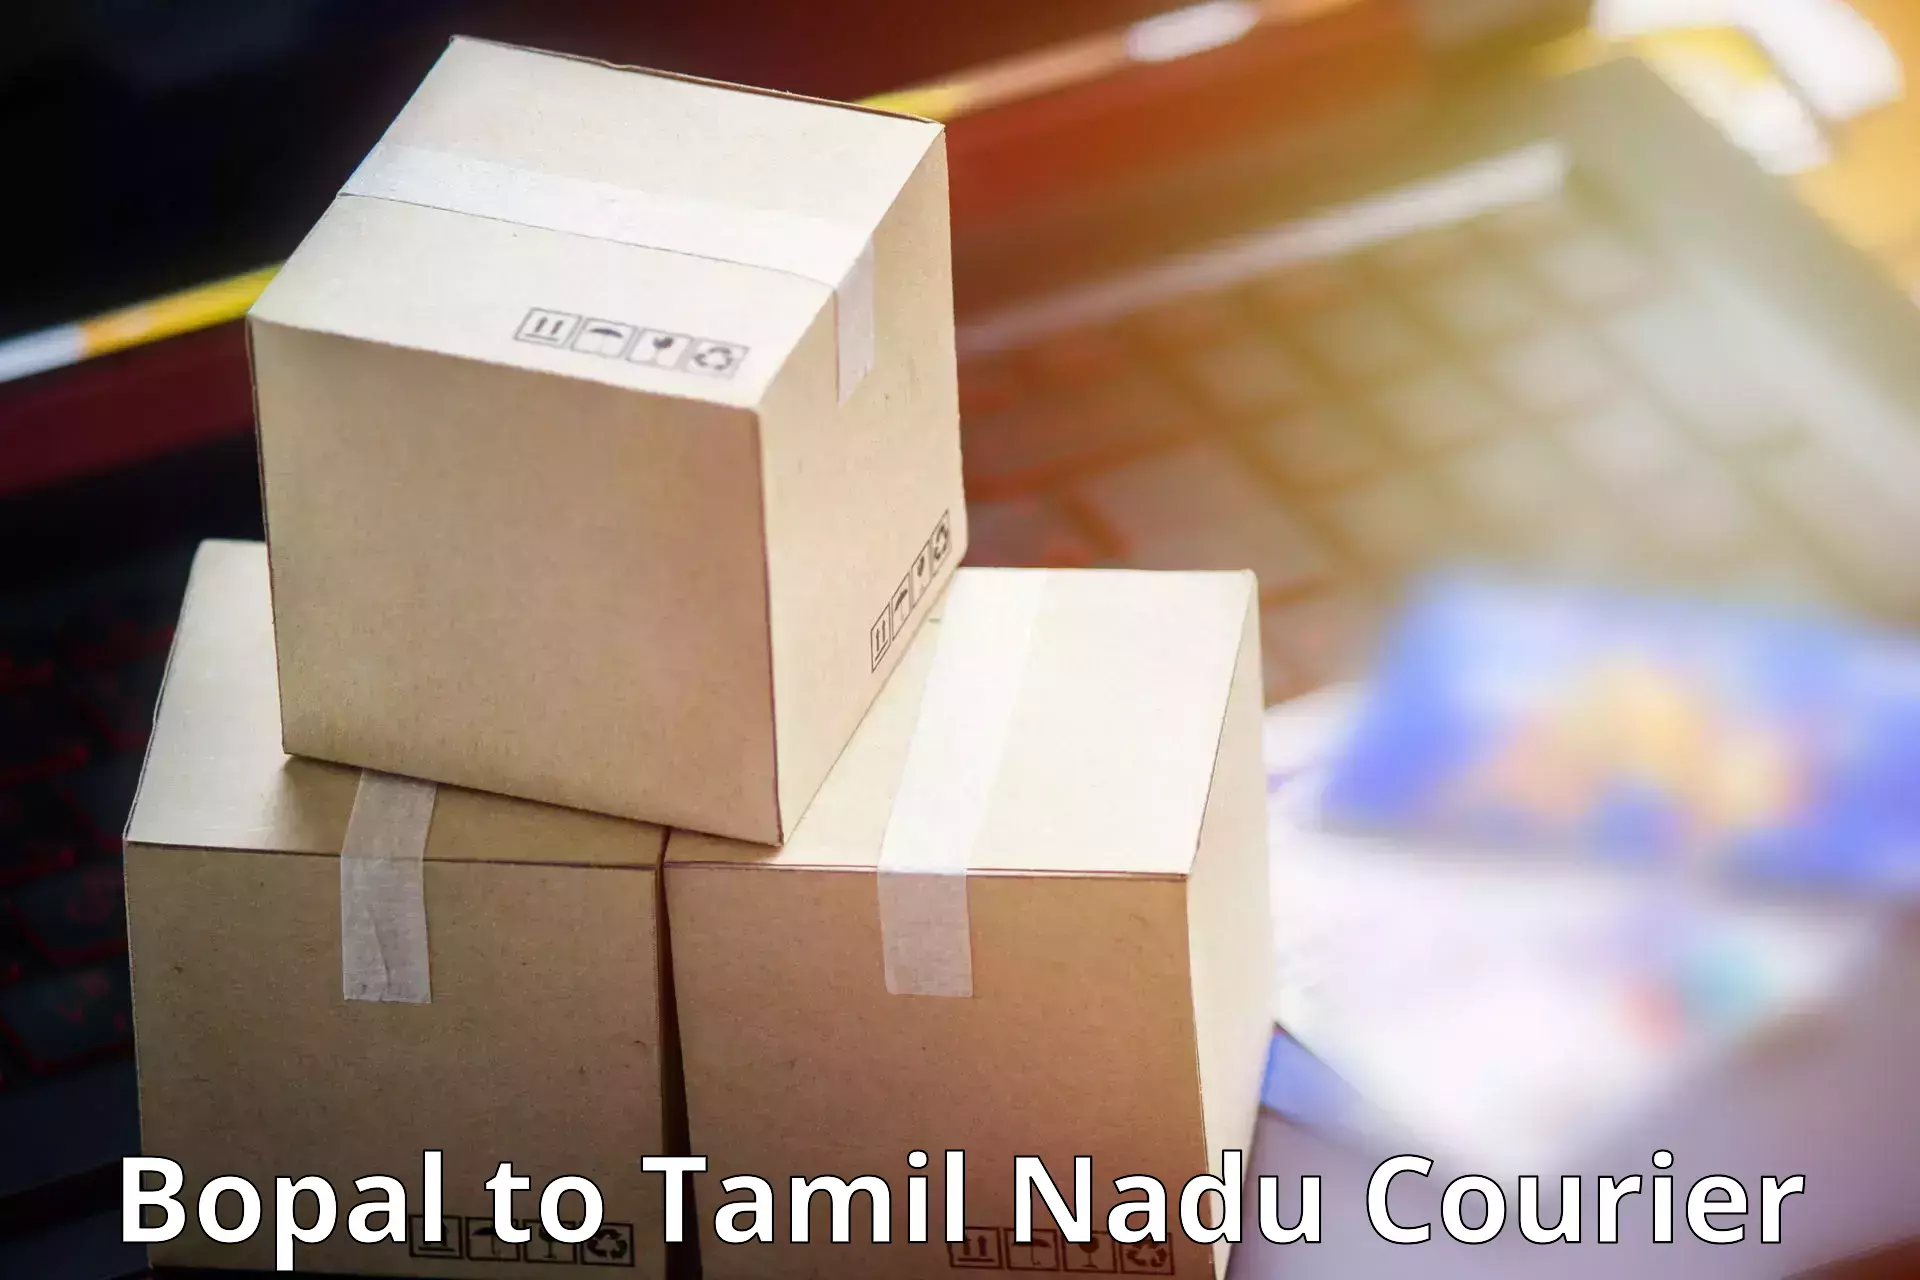 Professional courier handling Bopal to Tamil Nadu